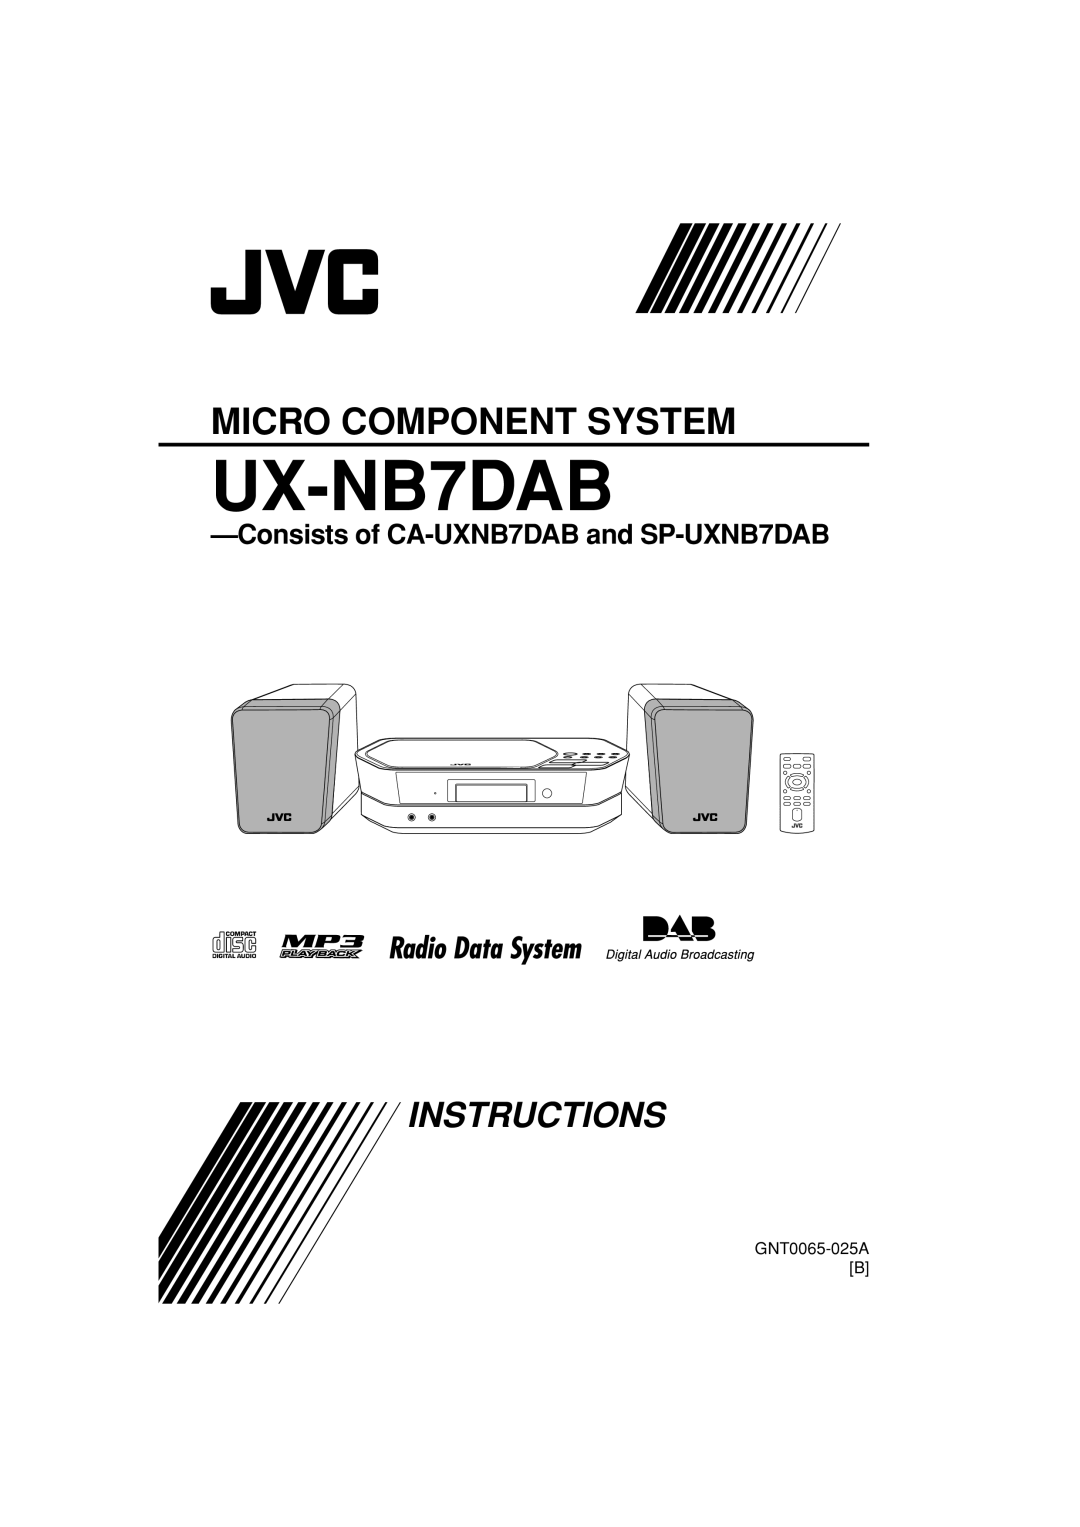 JVC manual GNT0065-025AB, UX-NB7DAB, Micro Component System, Instructions, Consistsof CA-UXNB7DABand SP-UXNB7DAB 